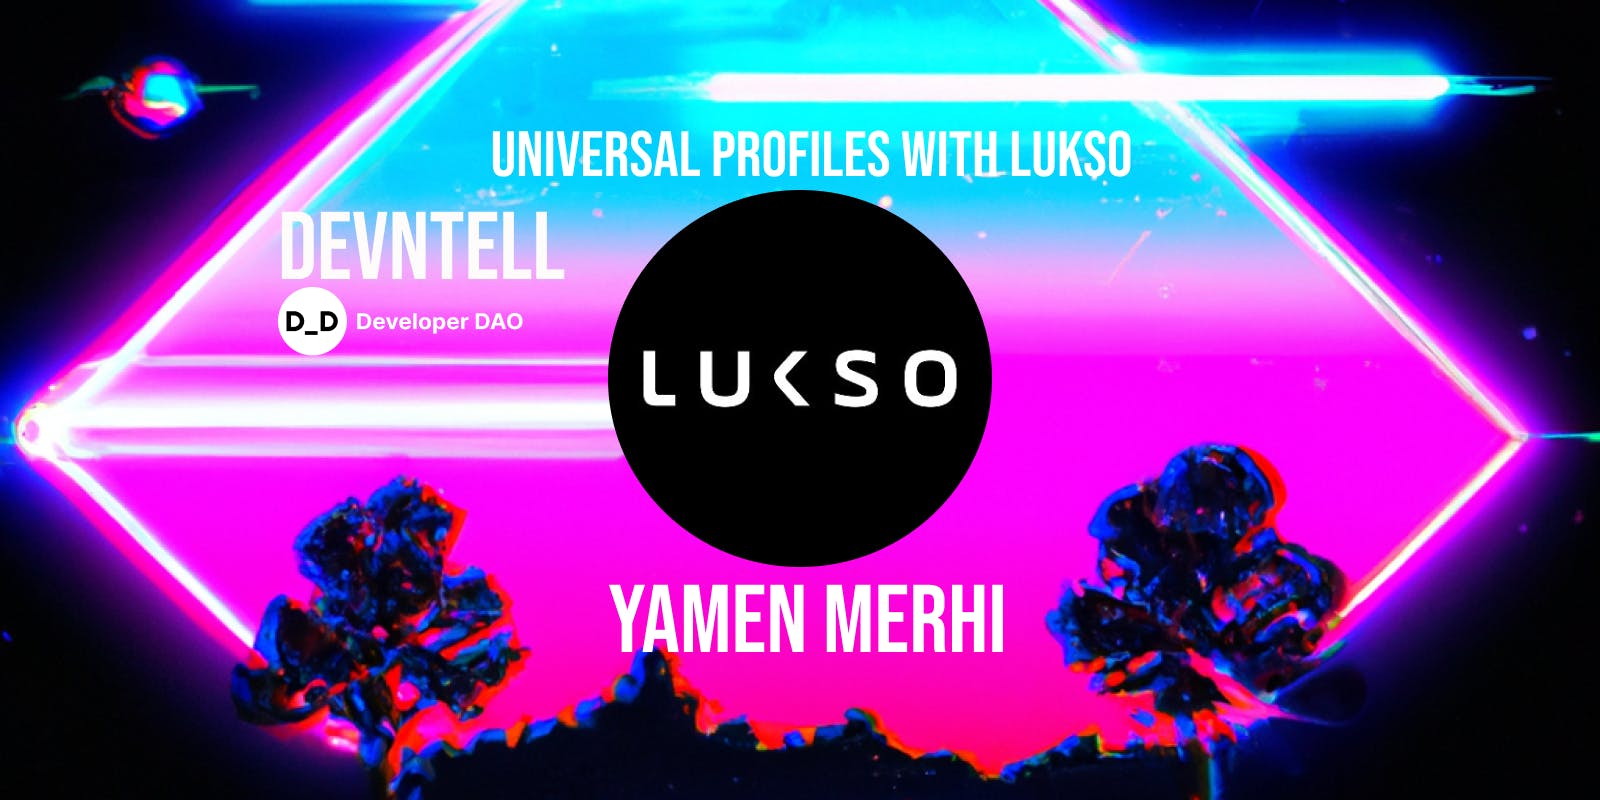 DevNTell - Universal Profiles with Lukso